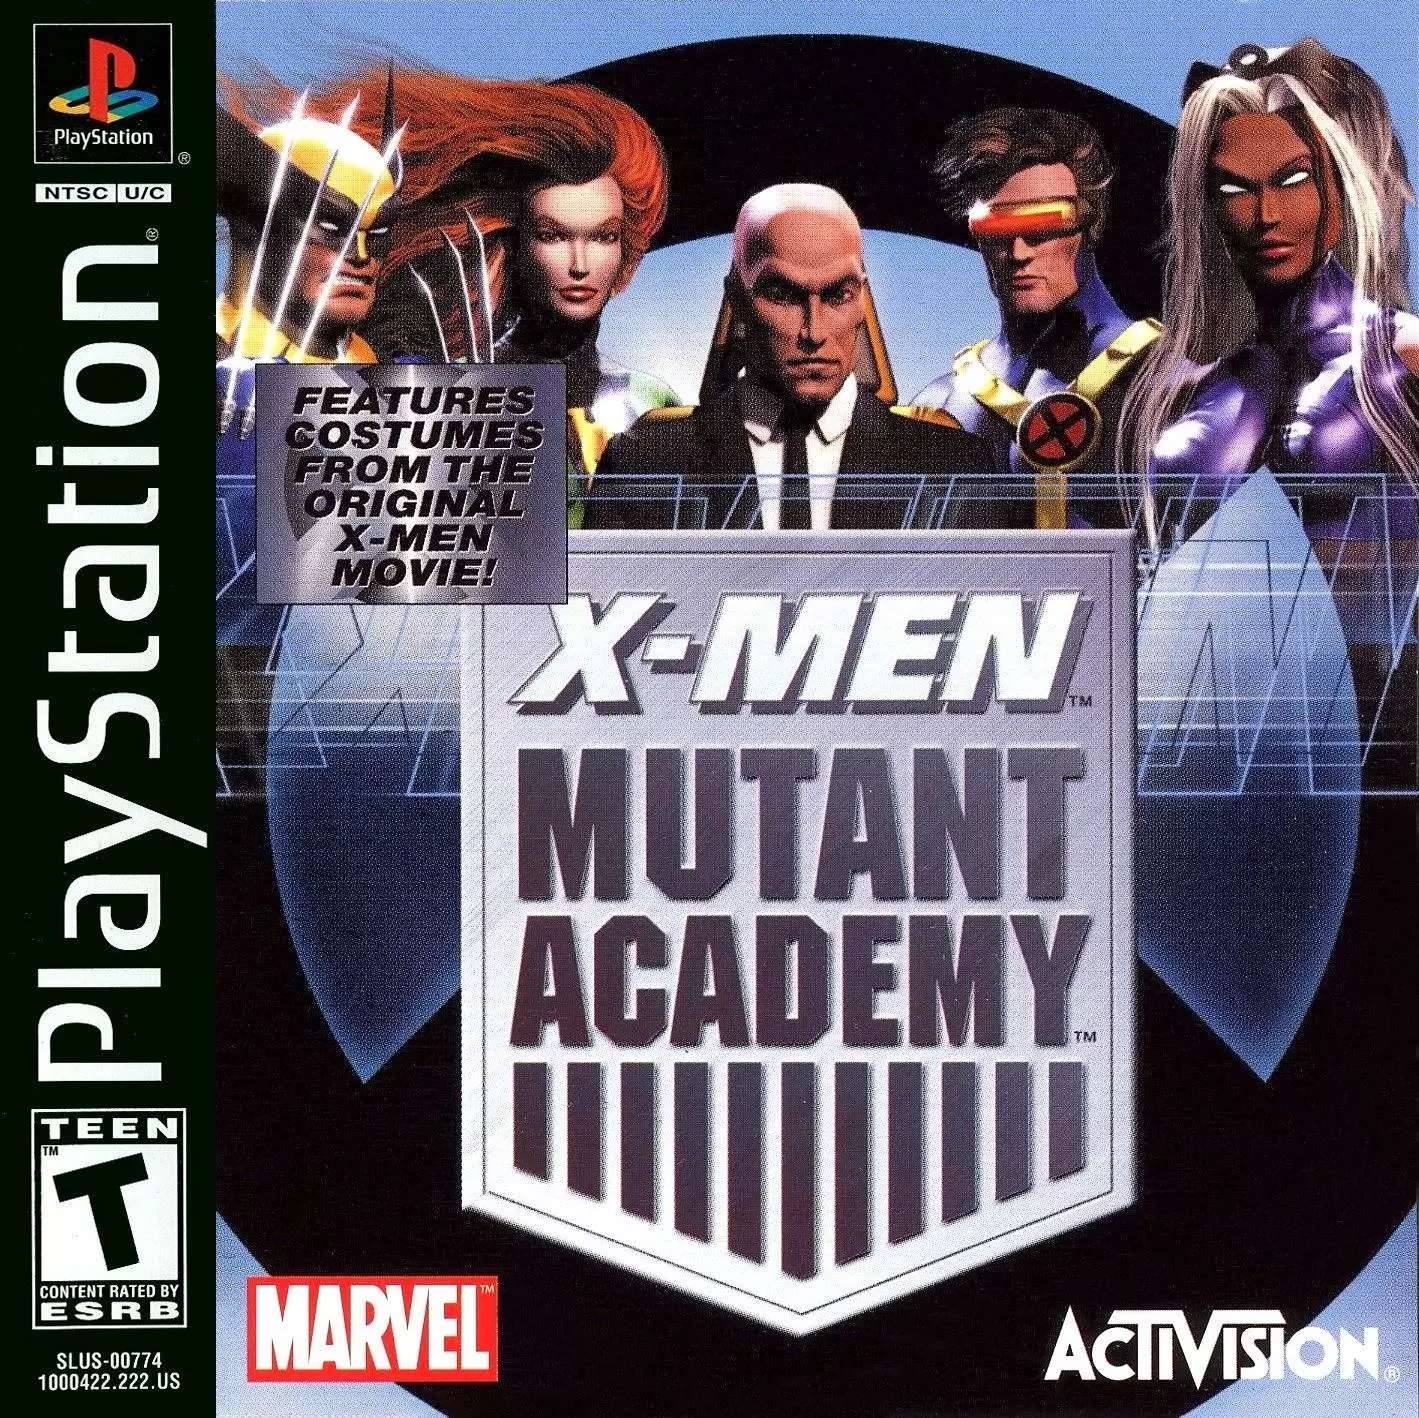 Playstation games - X-Men: Mutant Academy